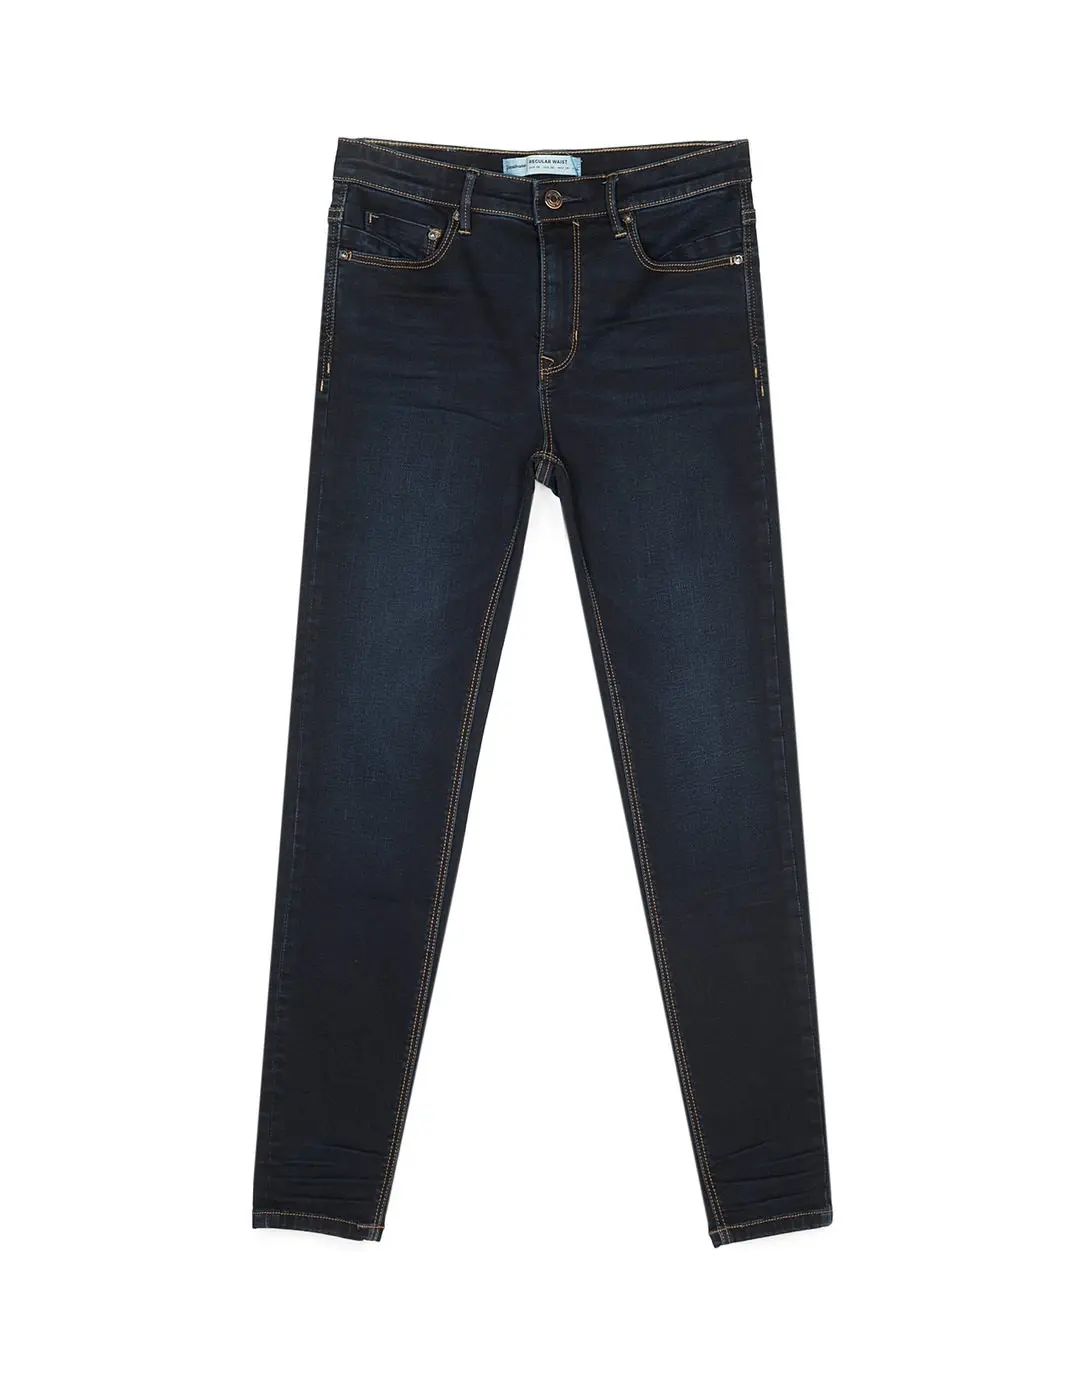 High waist jeans. (stradivarius.com)